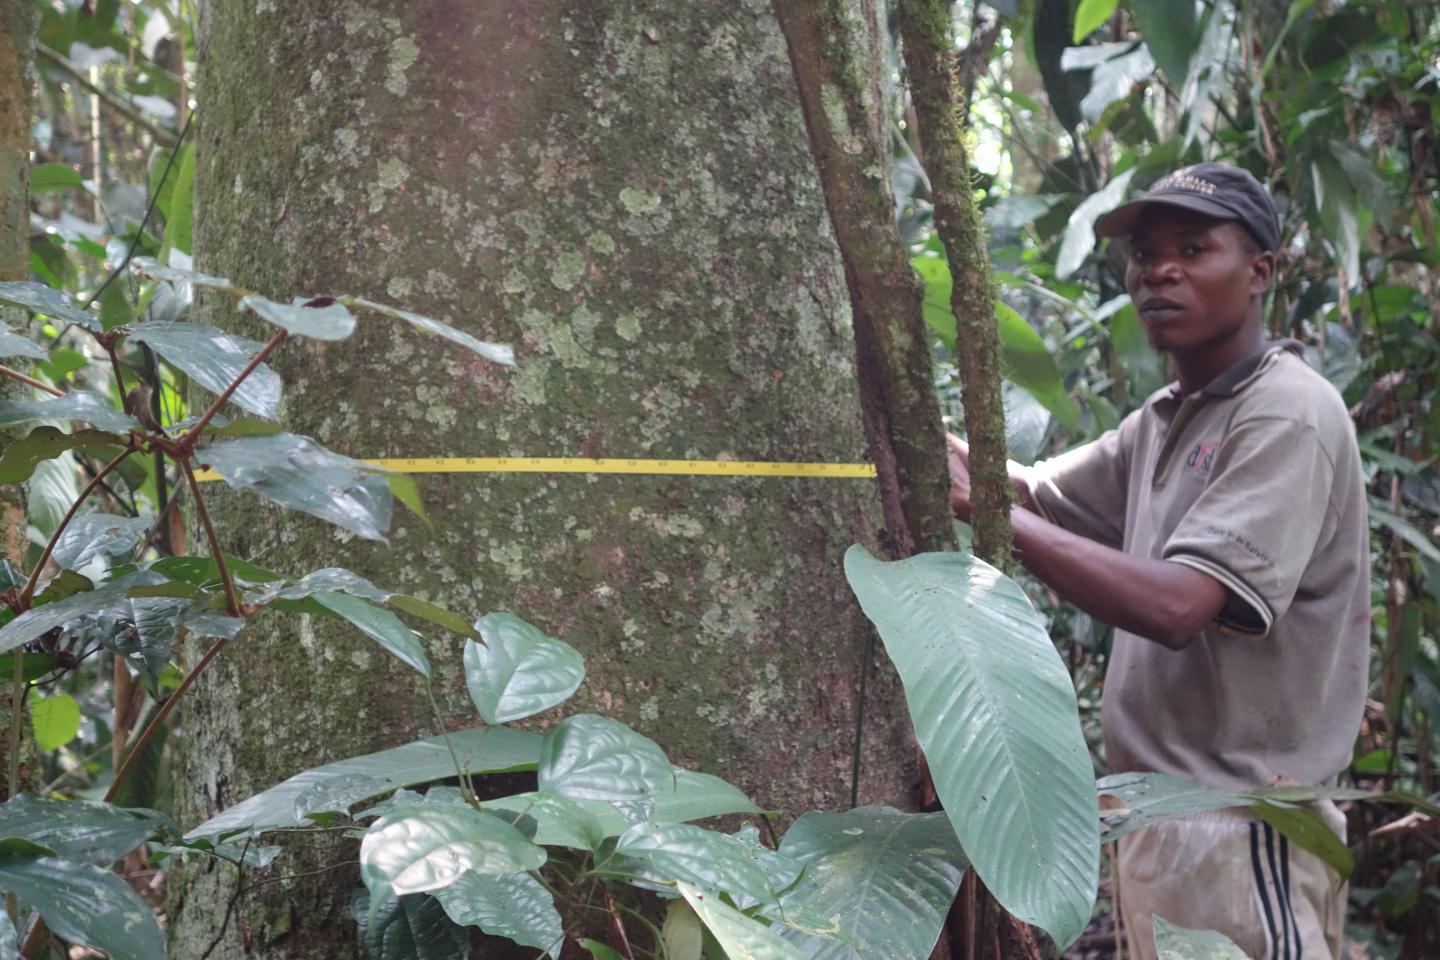 Tree measuring, Salonga National Park, Democratic Republic of Congo.